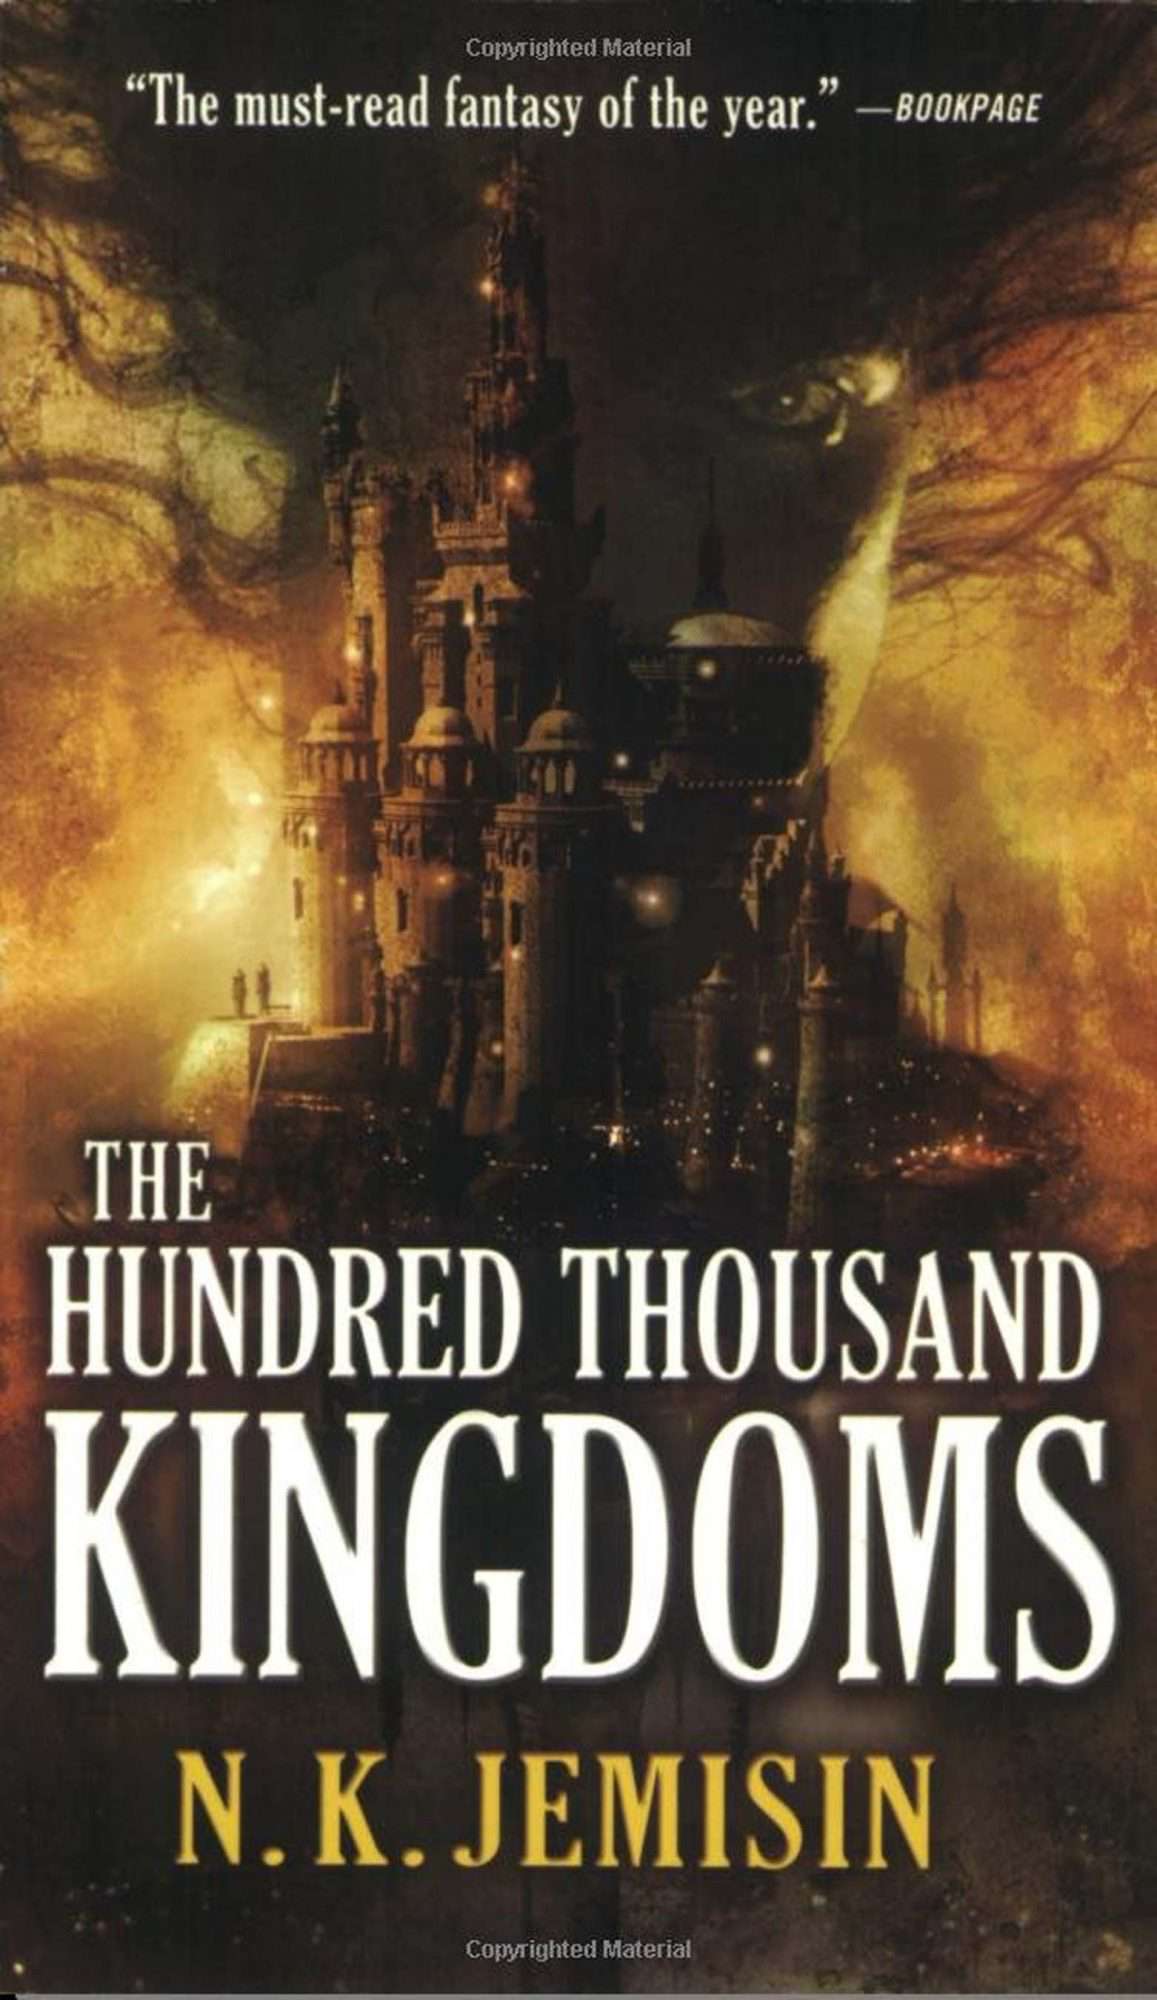 The Hundred Thousand Kingdoms&nbsp;by N.K. Jemisin (2010)